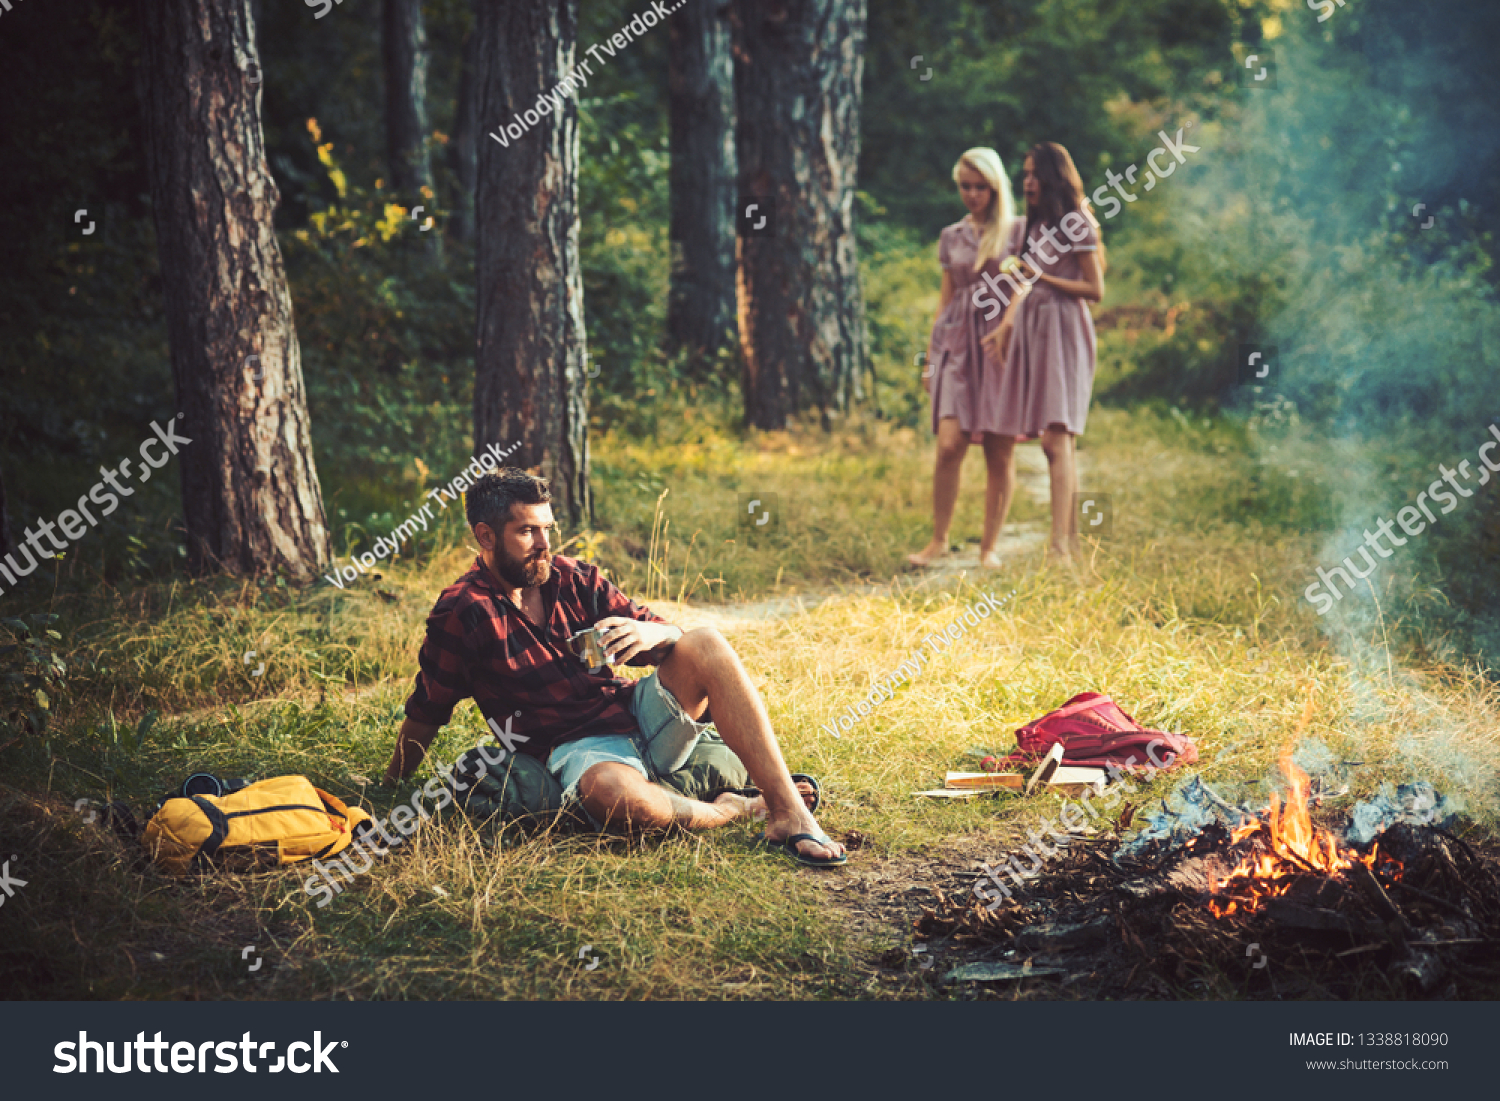 484 Barefoot Men Camping Images, Stock Photos & Vectors | Shutterstock